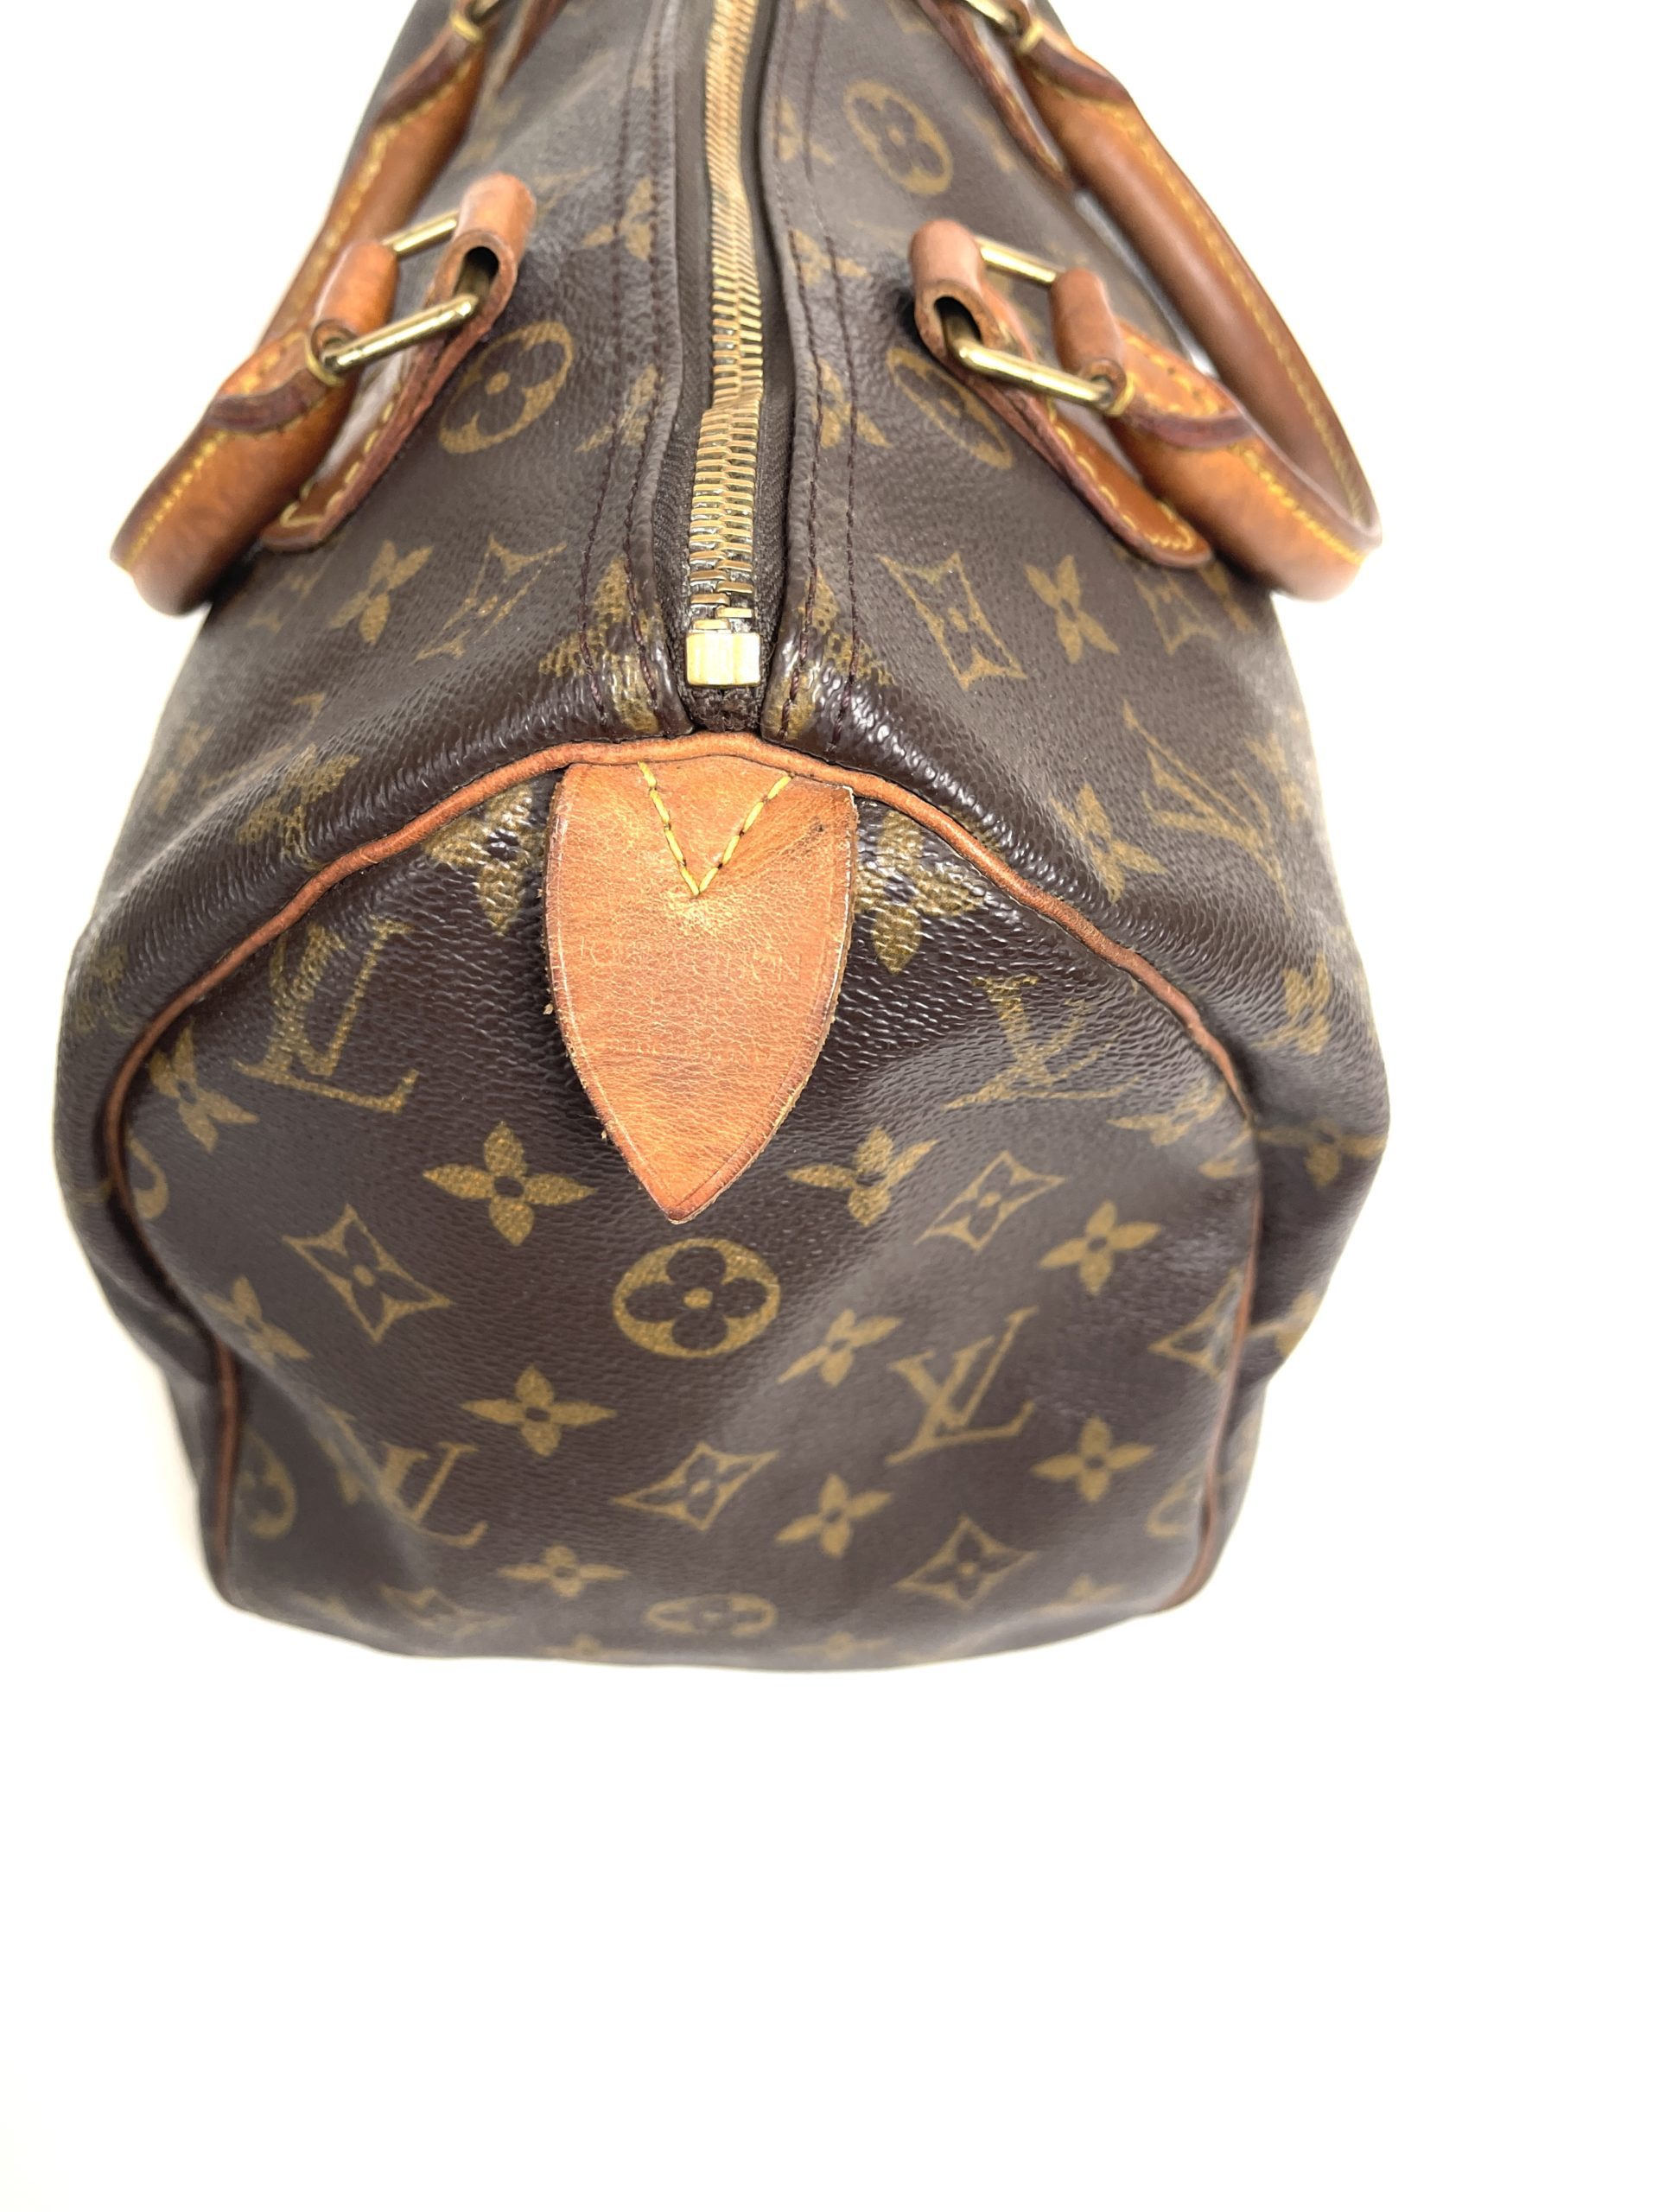 Authentic Louis Vuitton Speedy Satchel Monogram Bag LV Handbag Vintage